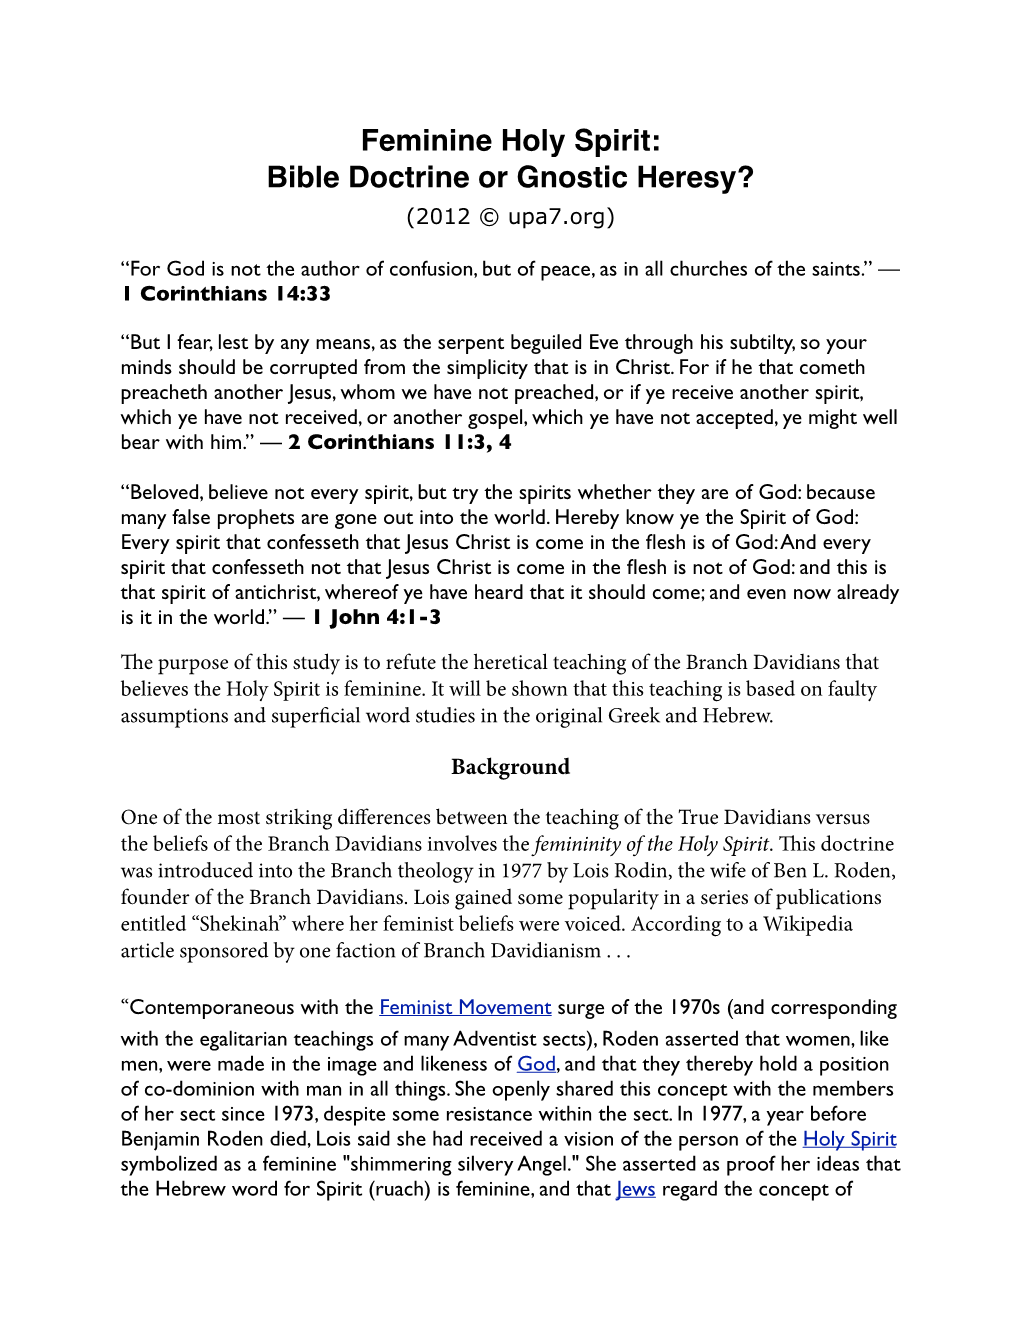 Feminine Holy Spirit: Bible Doctrine Or Gnostic Heresy? (2012 © Upa7.Org)